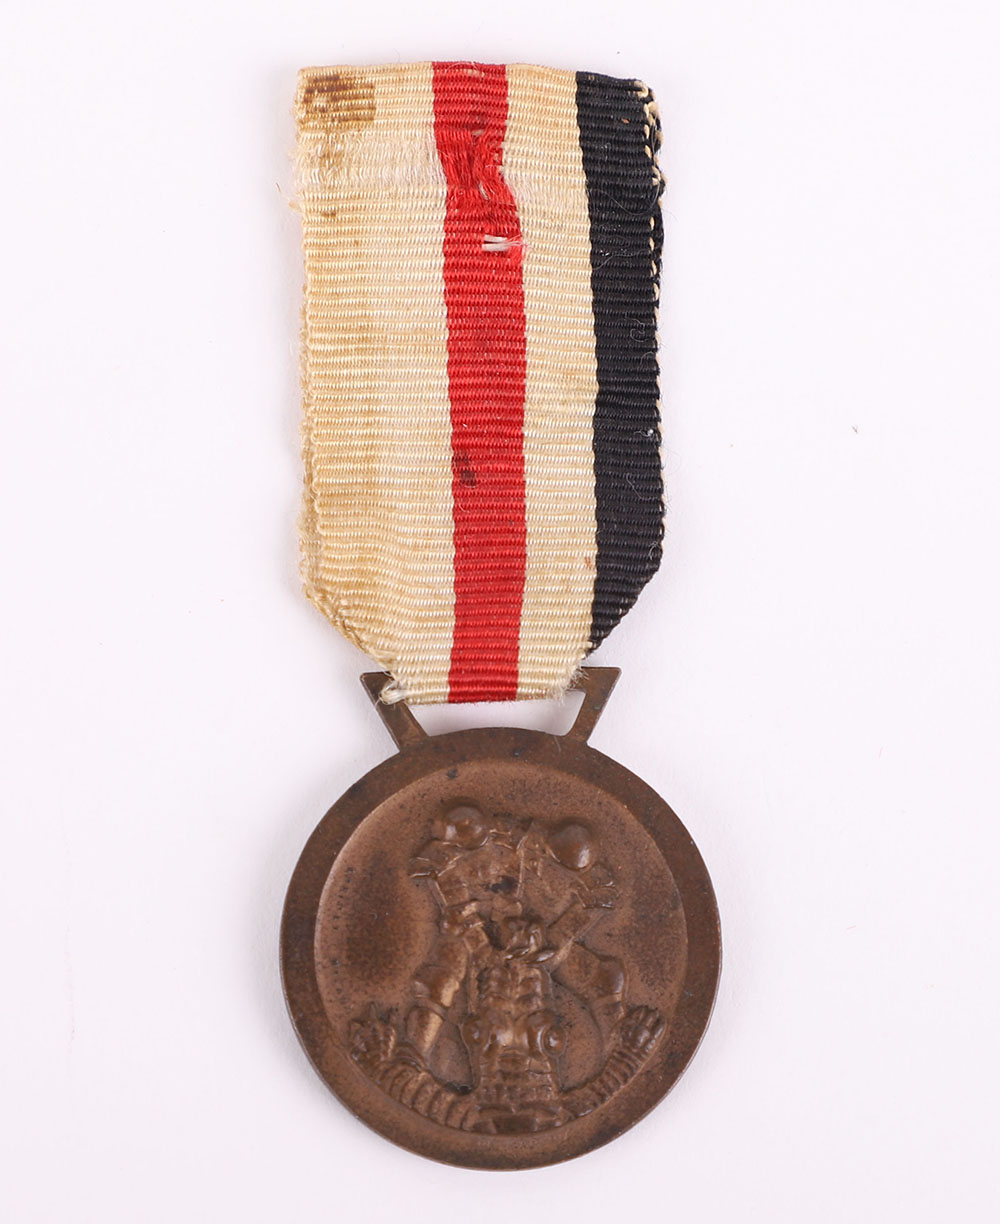 WW2 German Italian Afrikakorps Campaign Medal - Image 3 of 4